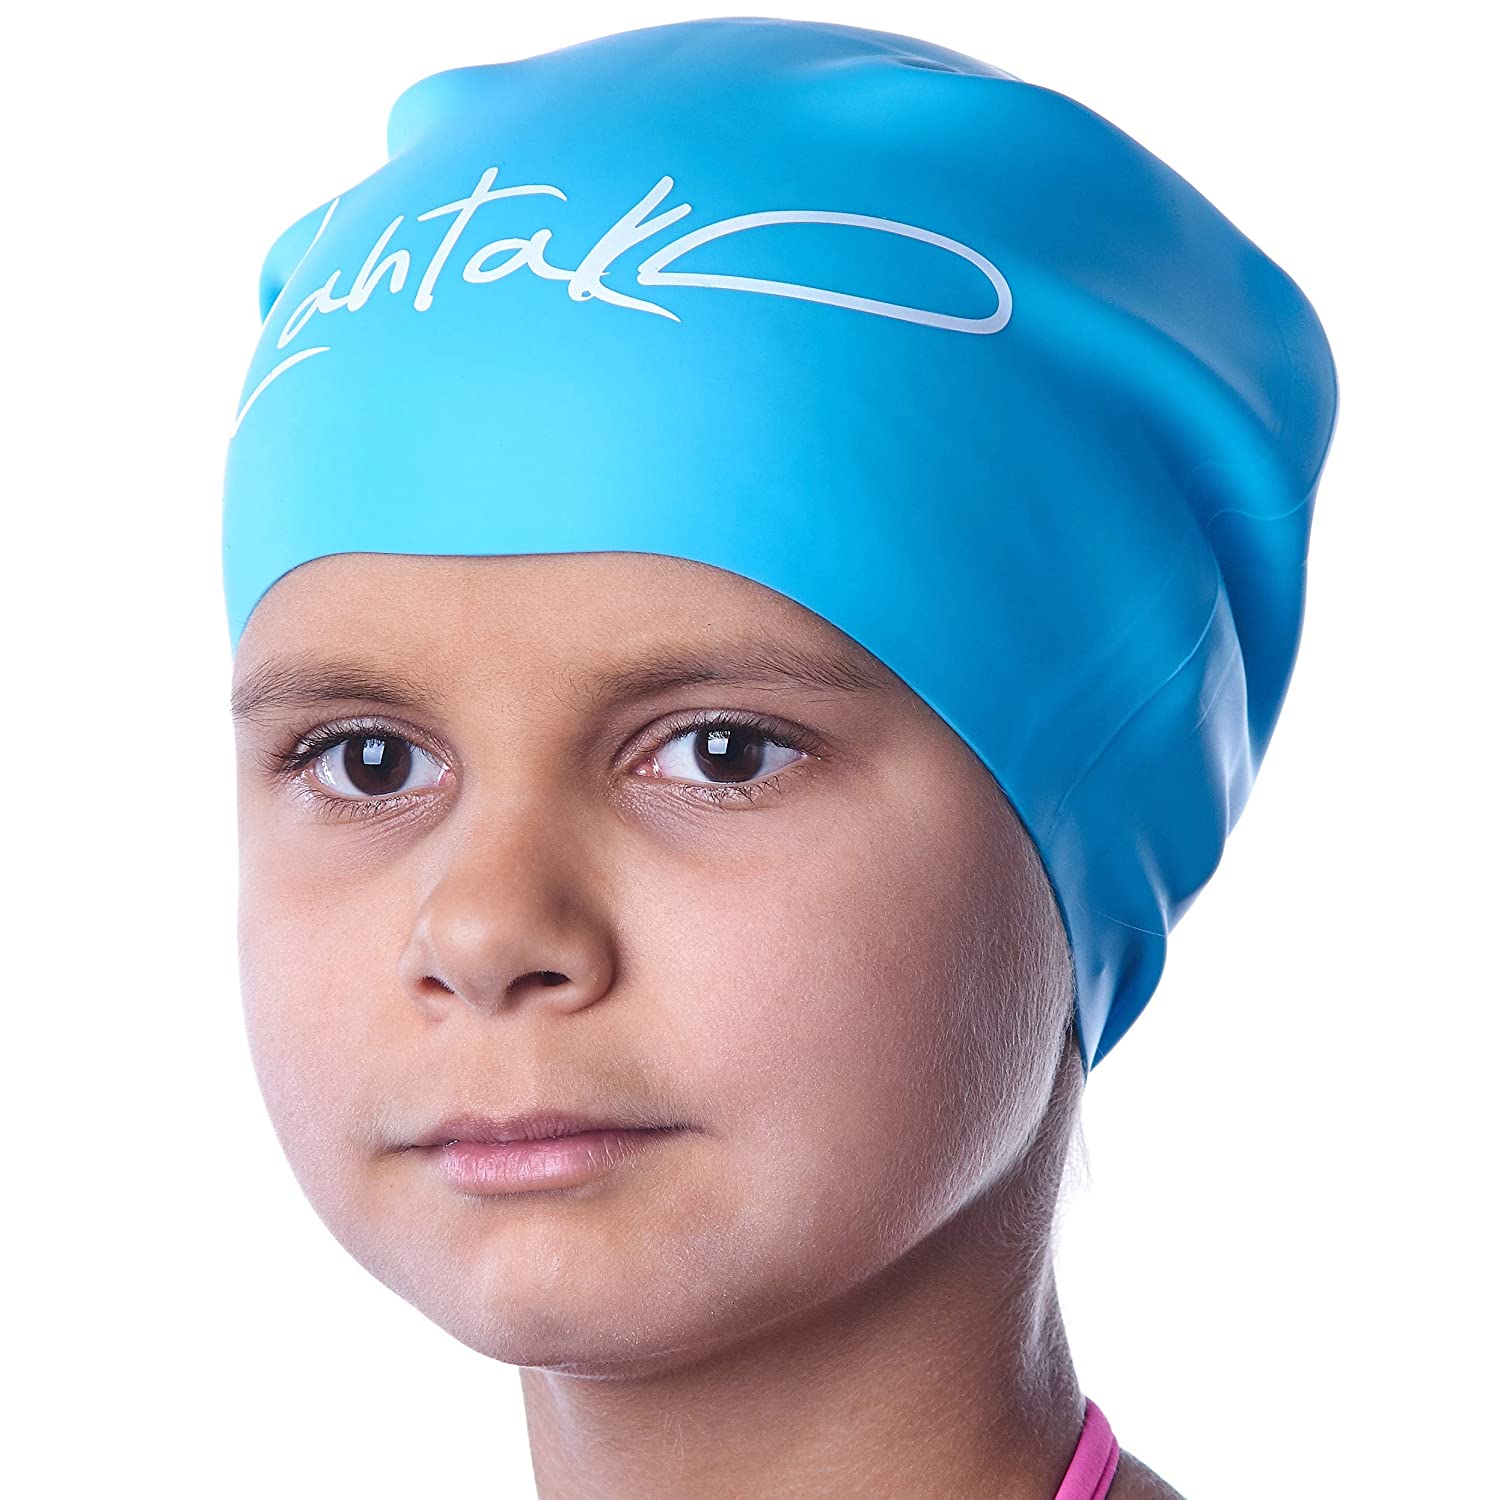 Swim Caps for Long Hair Kids - Swimming Cap for Girls Boys Kids Teens with Long Curly Hair Braids Dreadlocks 